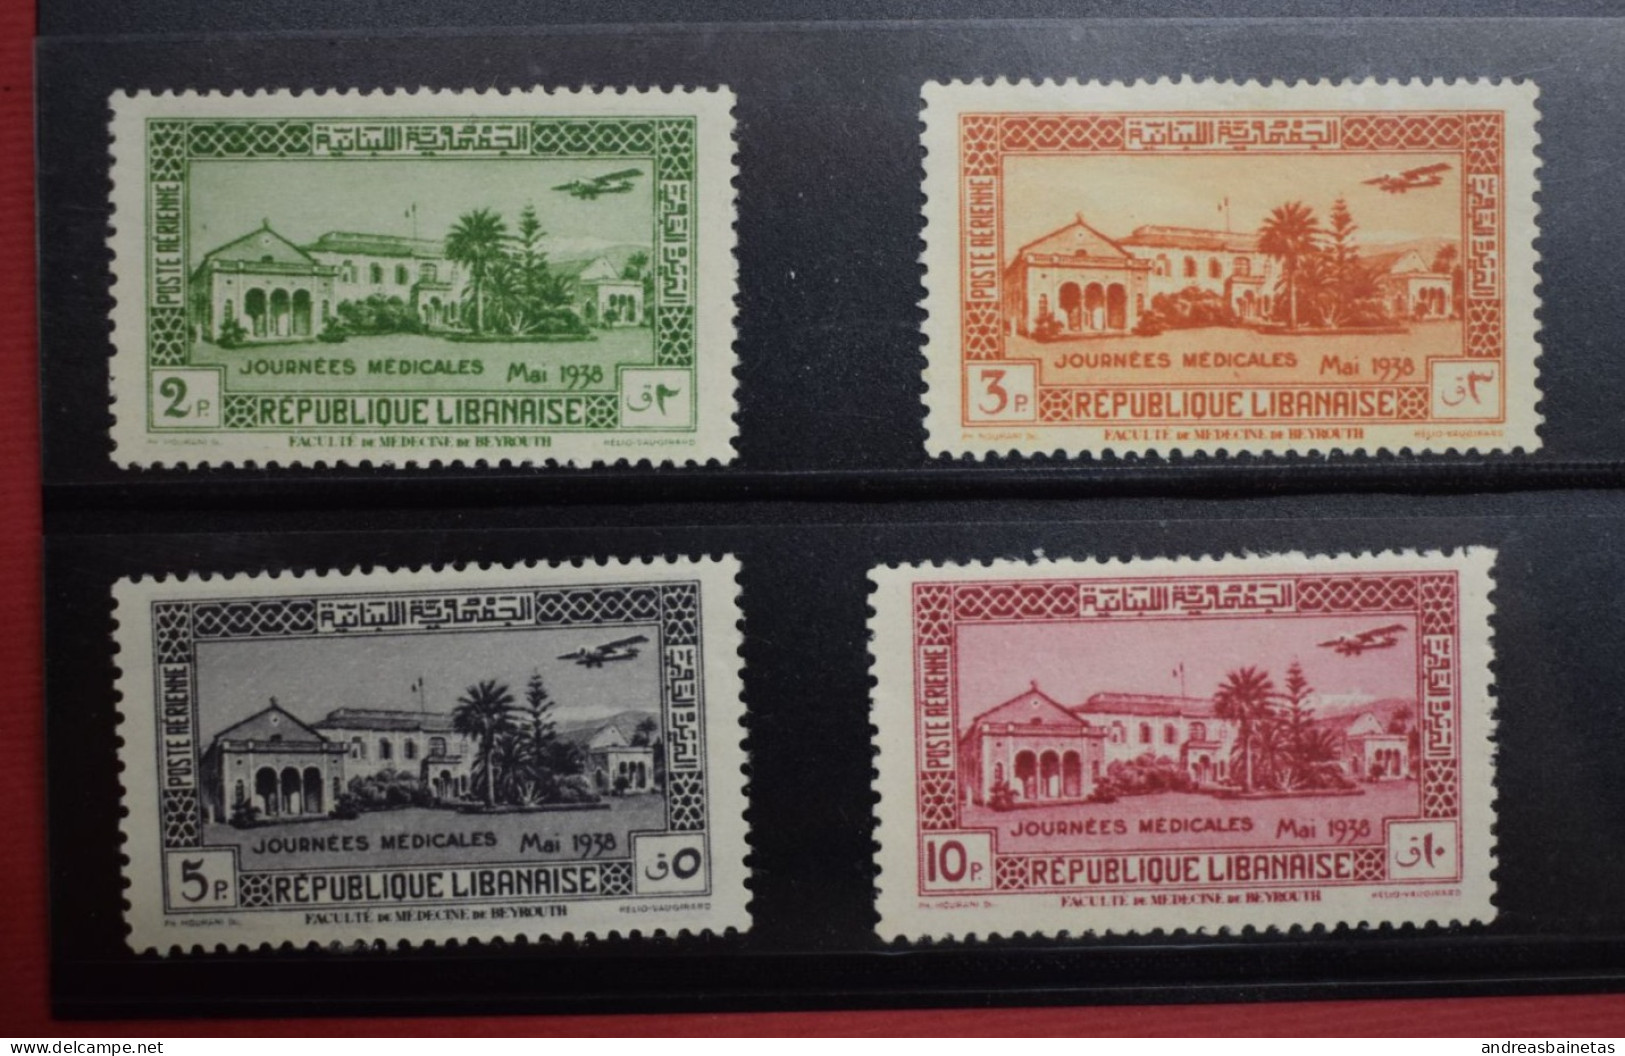 Stamps Lebanon 1938 Airmail - Medical Congress, Beirut MNH - Lebanon